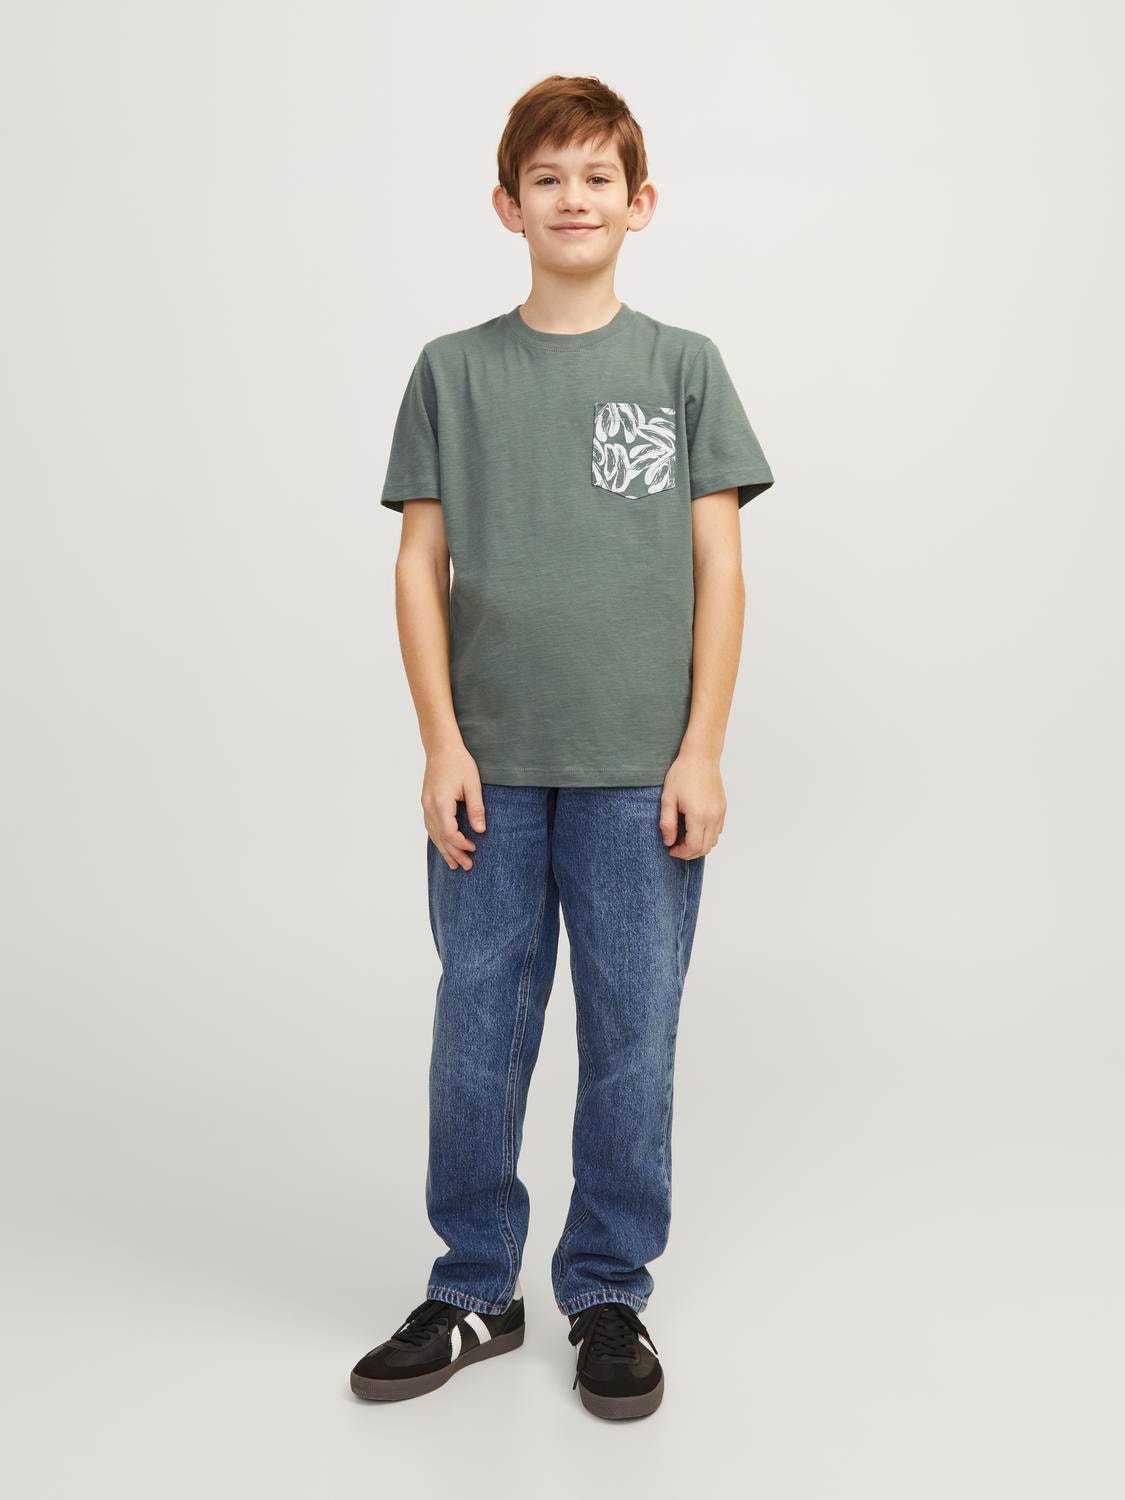 Jack & Jones T-shirt Stampato Per Bambino -Laurel Wreath - 12253977